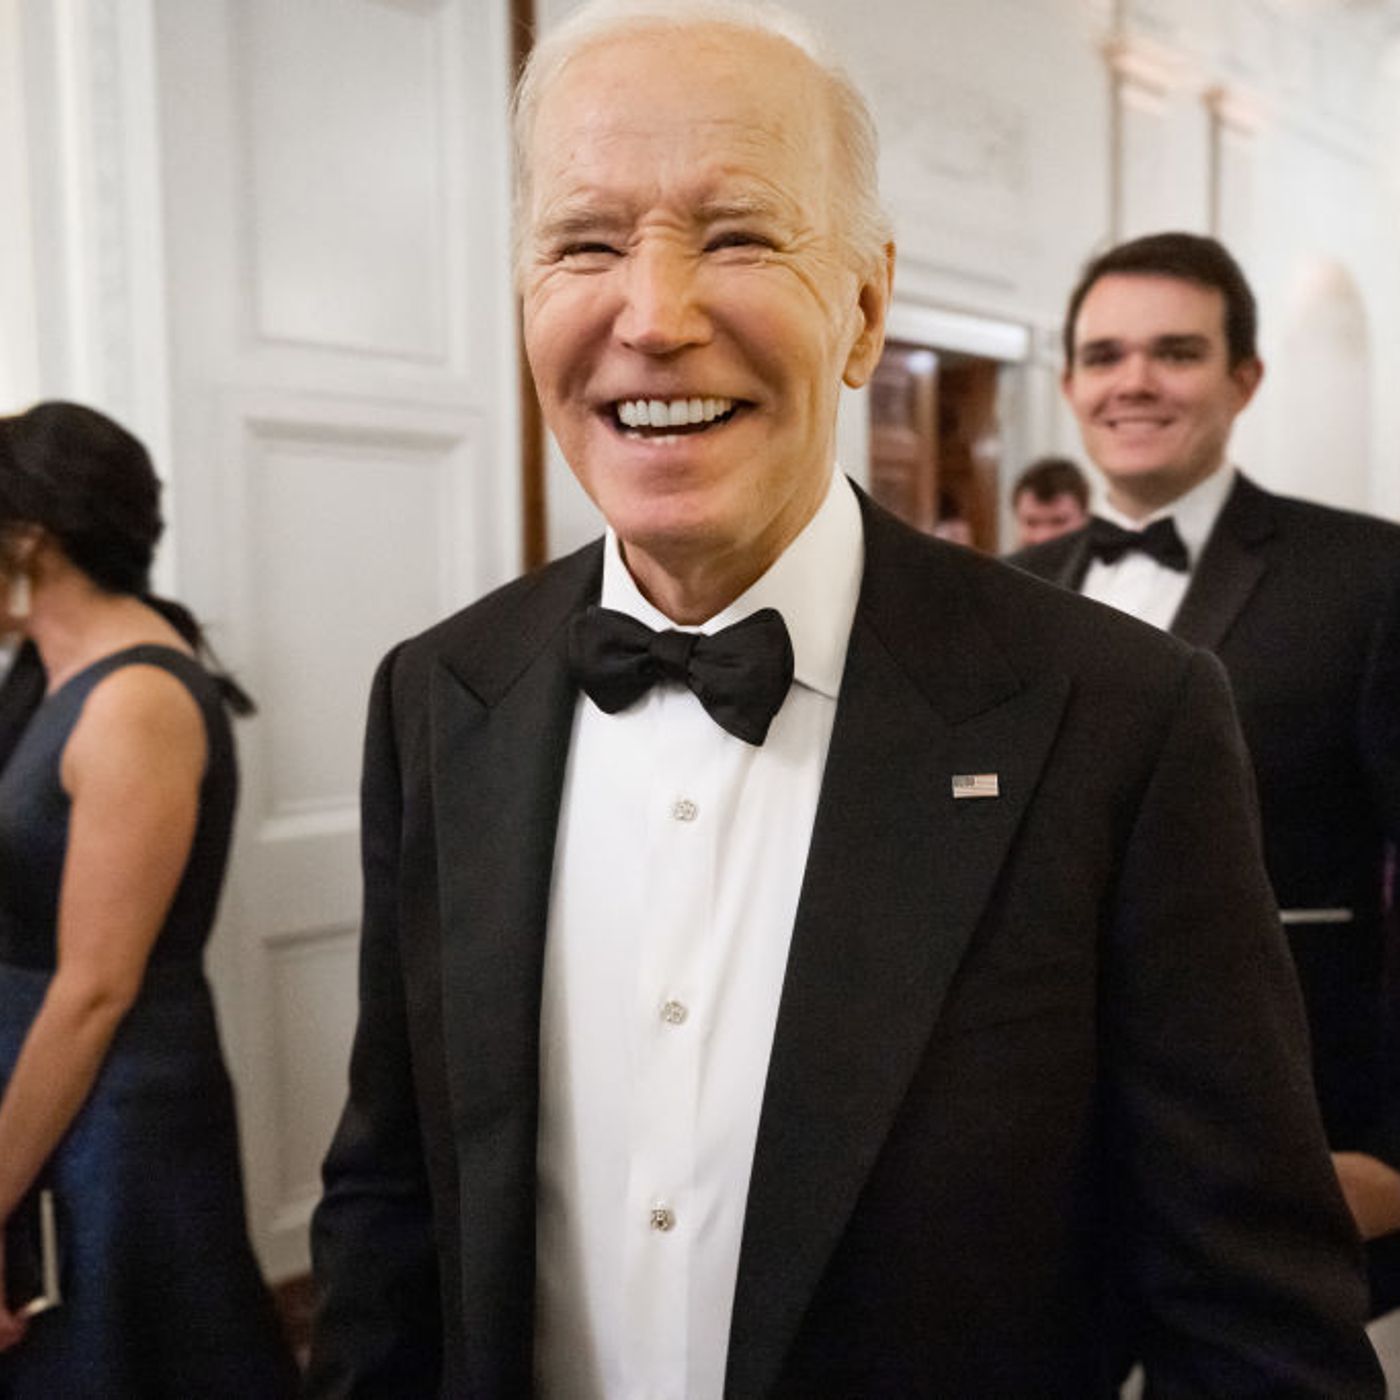 Are pollsters underestimating Joe Biden?